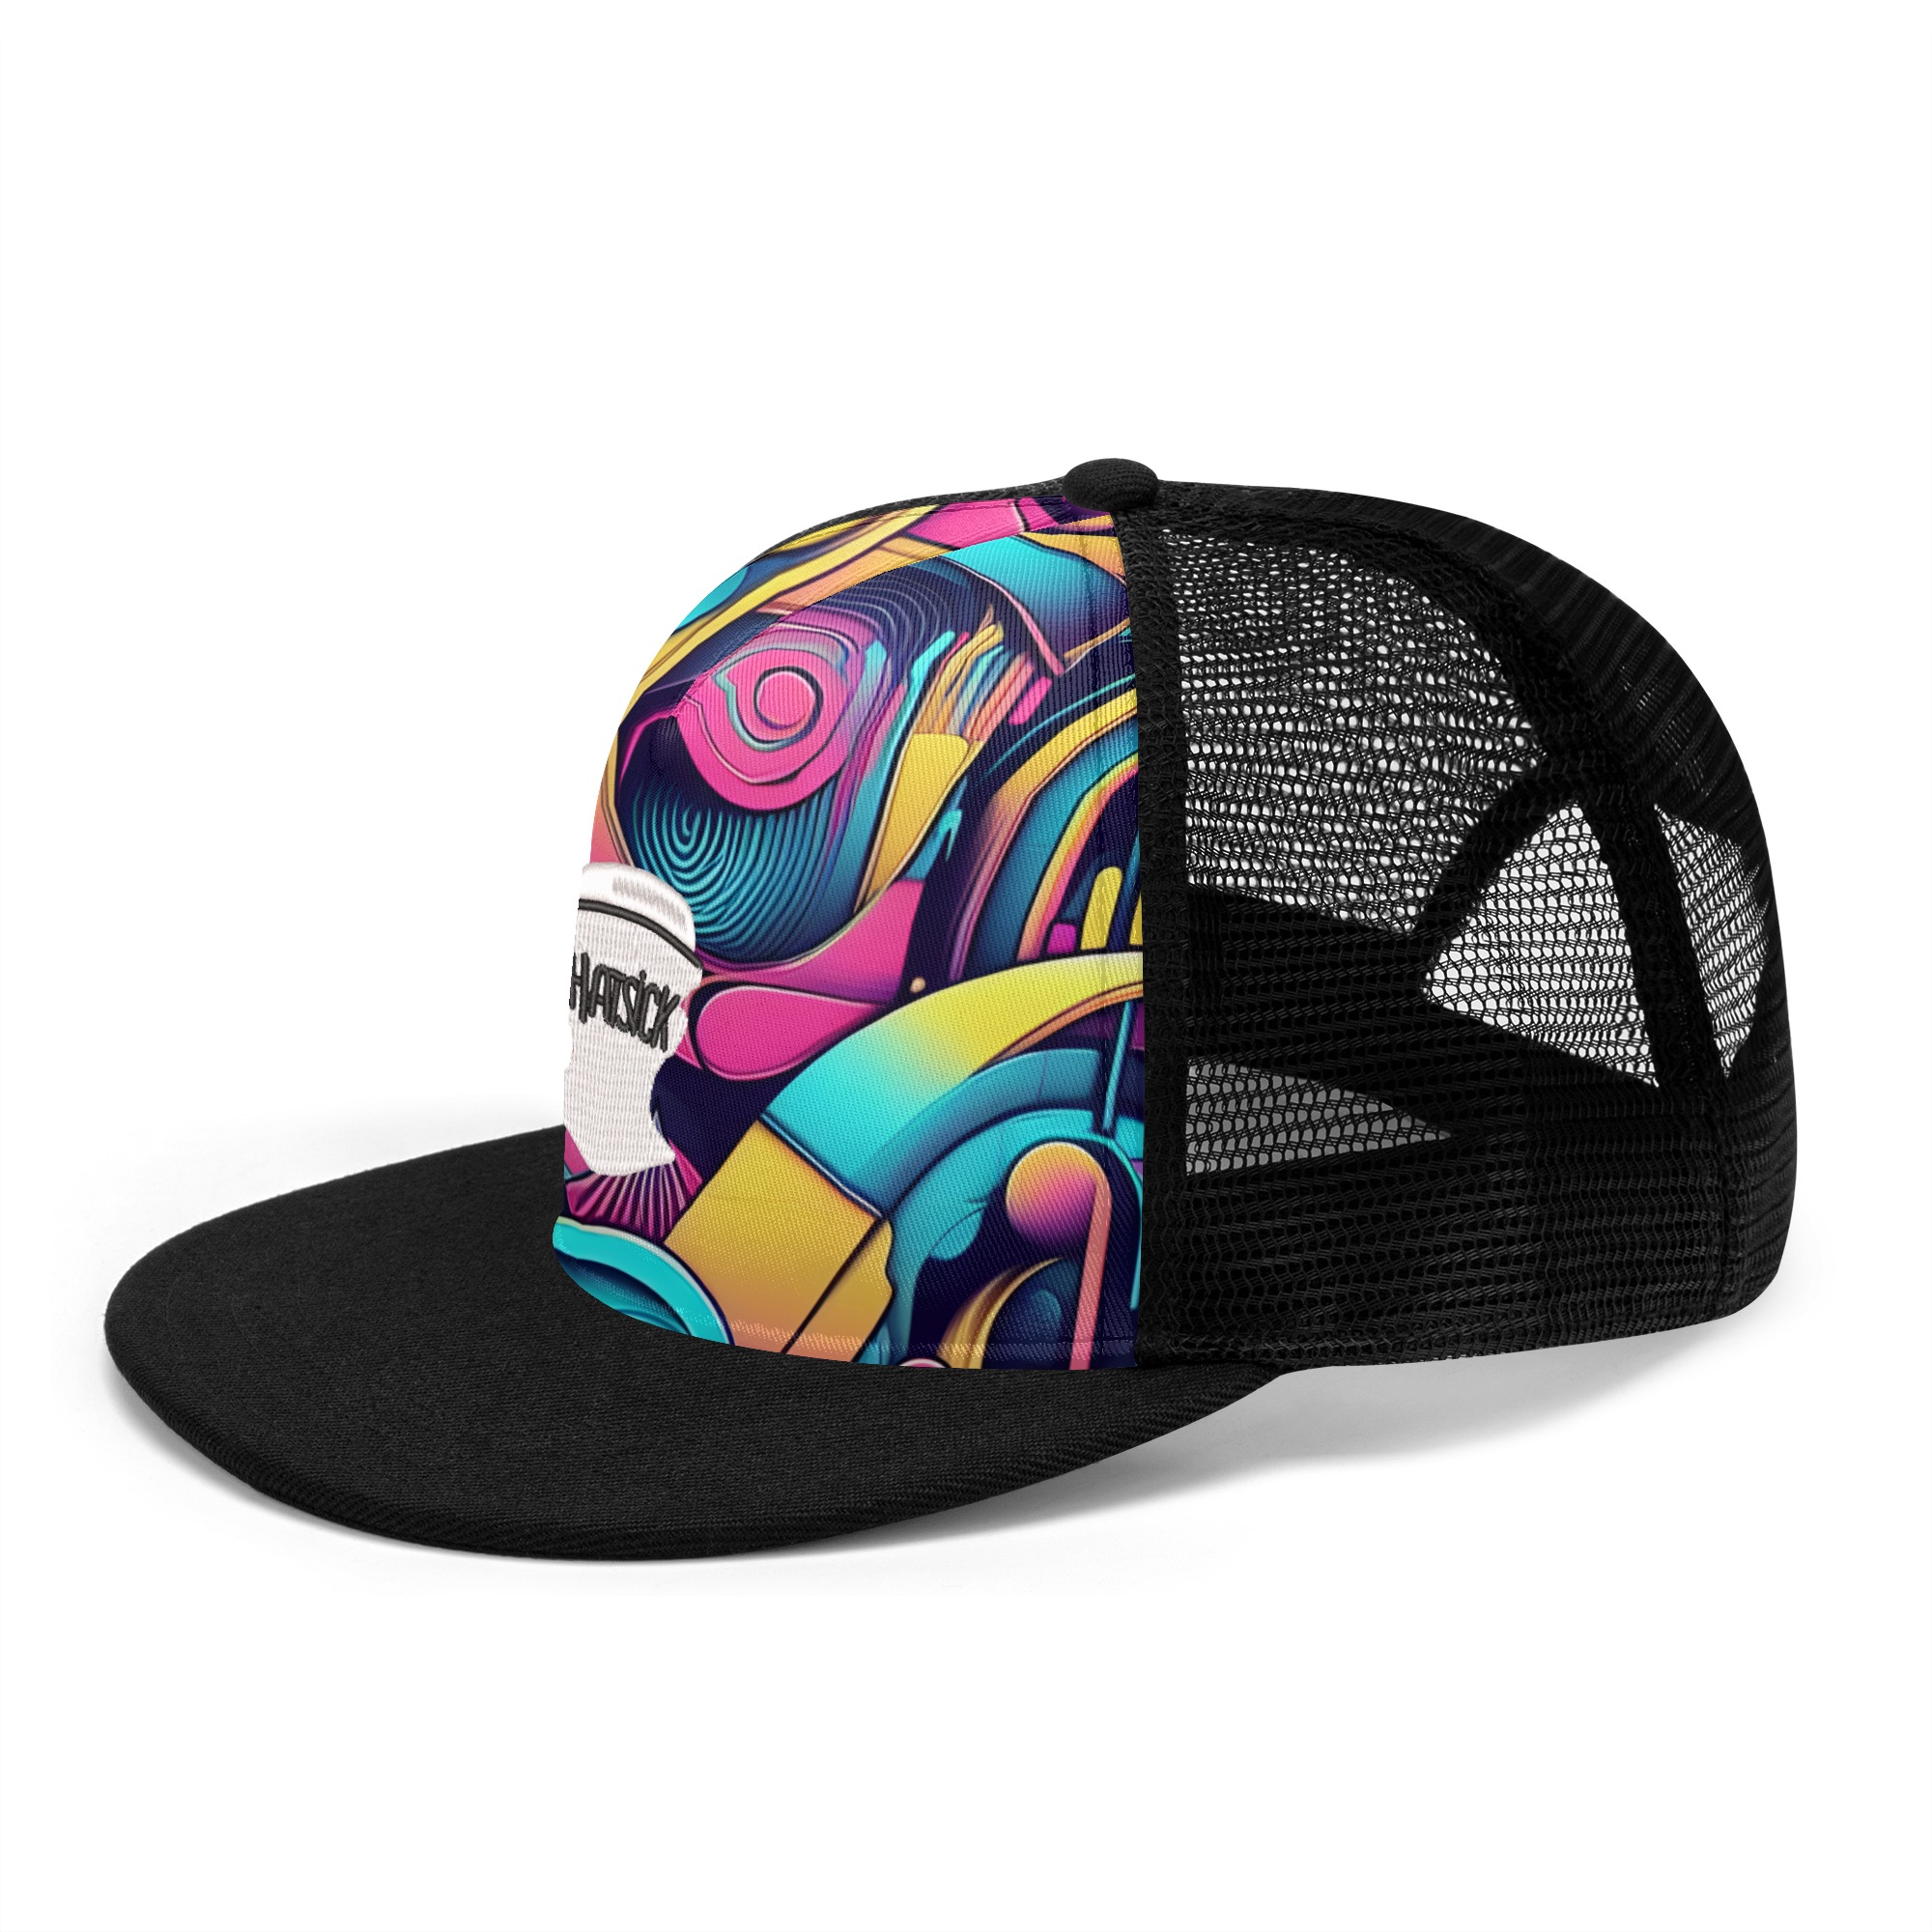 H-Graffite Mesh Hip-hop Hats